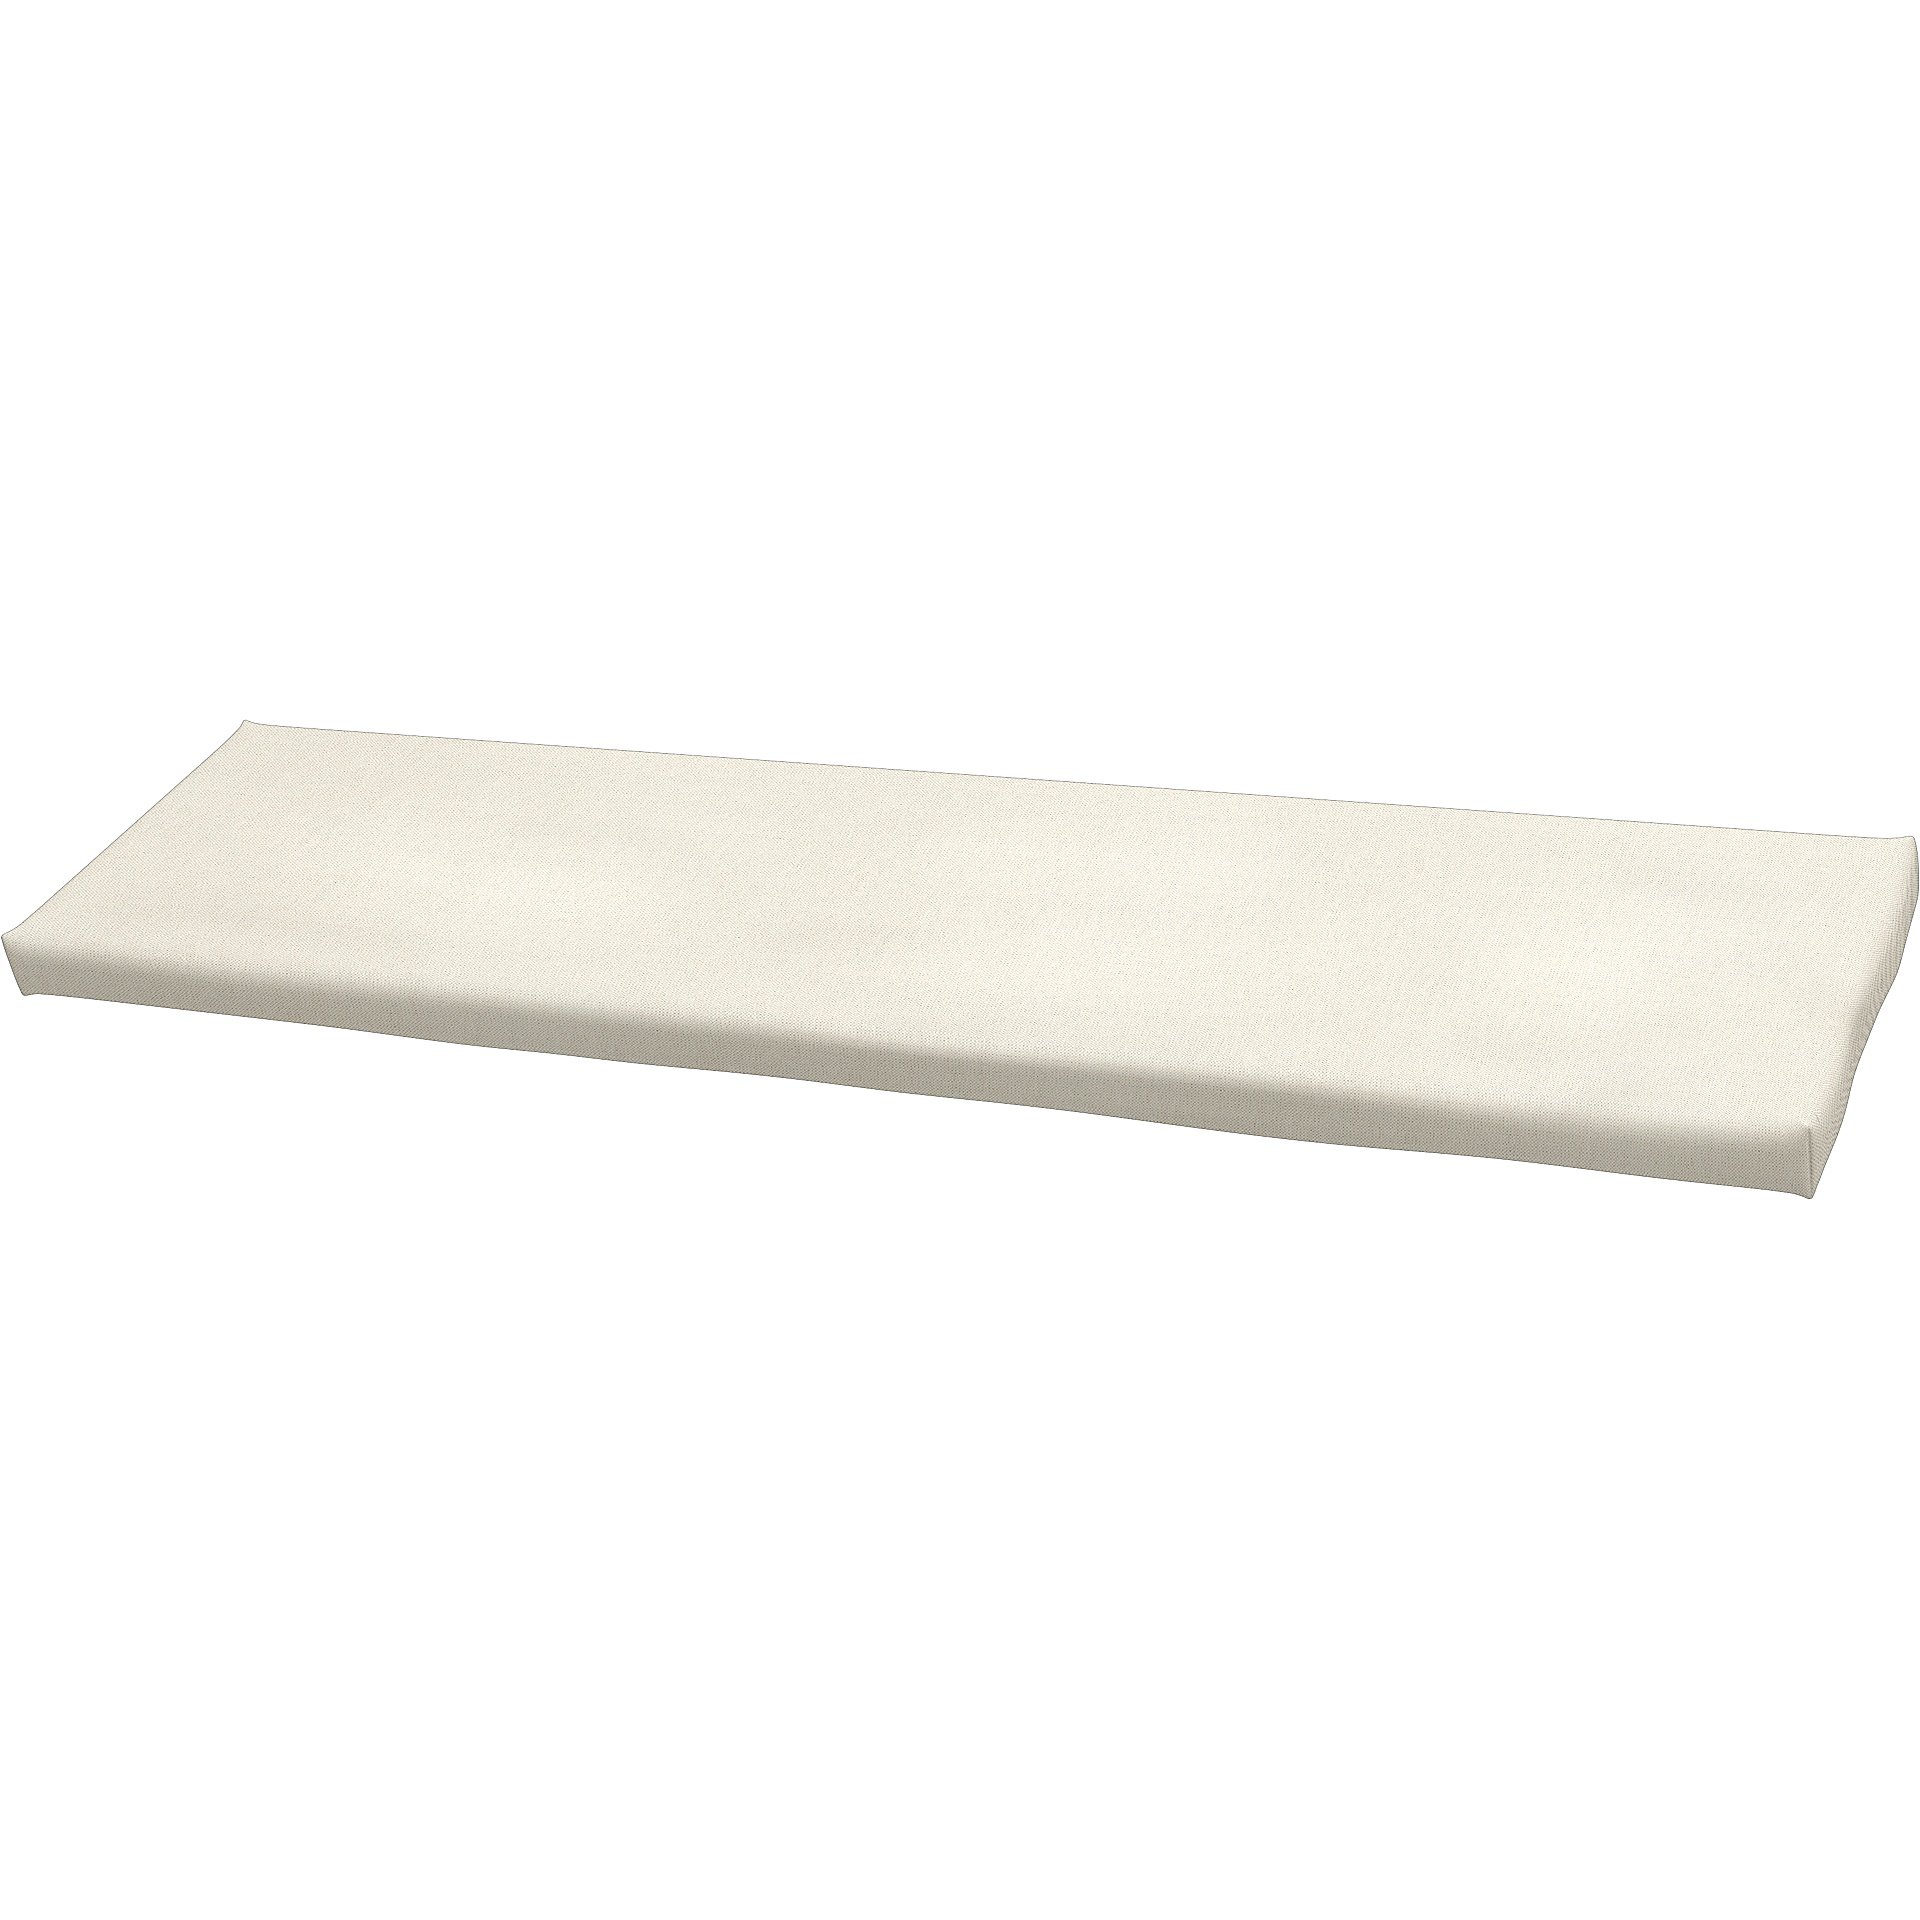 IKEA - Universal bench cushion cover 120x35x3,5 cm, Unbleached, Linen - Bemz